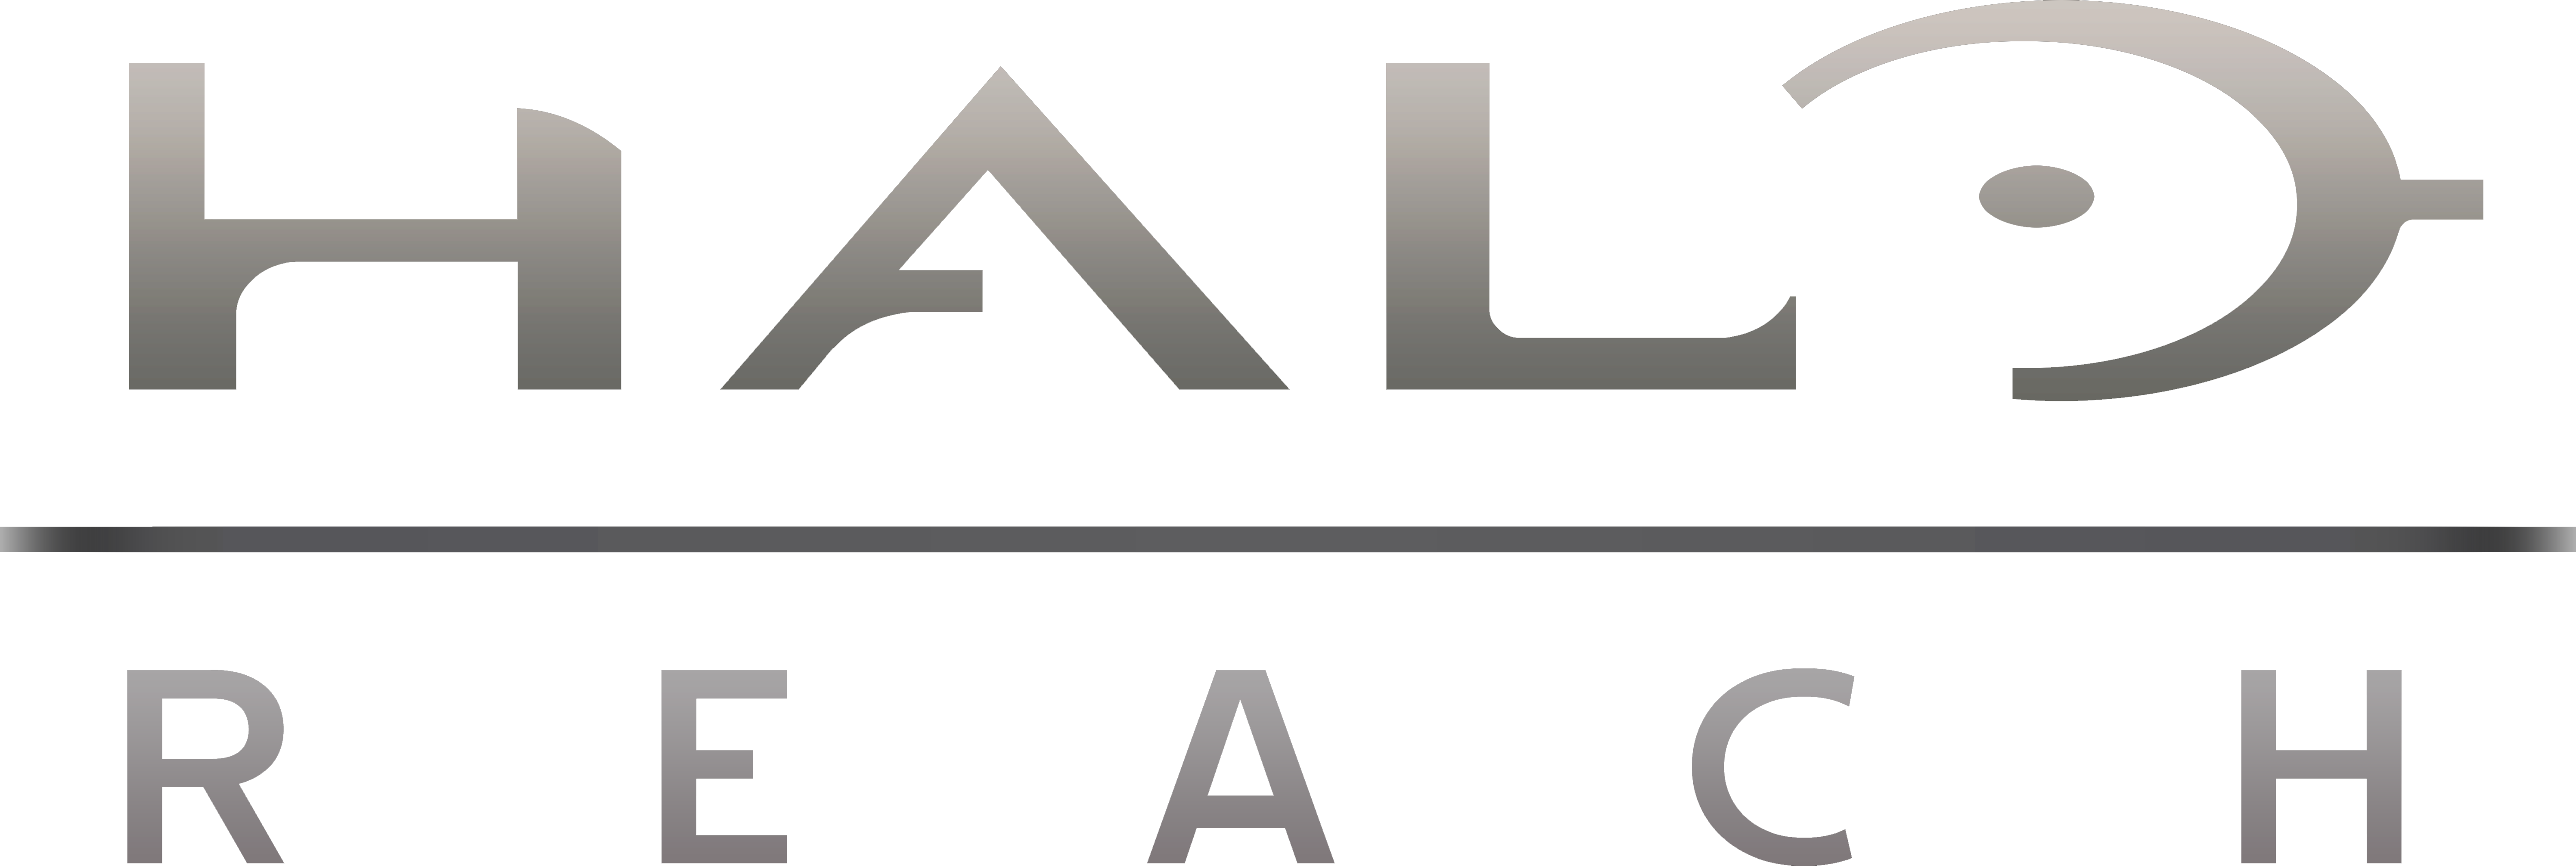 Halo Wars Logo Photos PNG Image